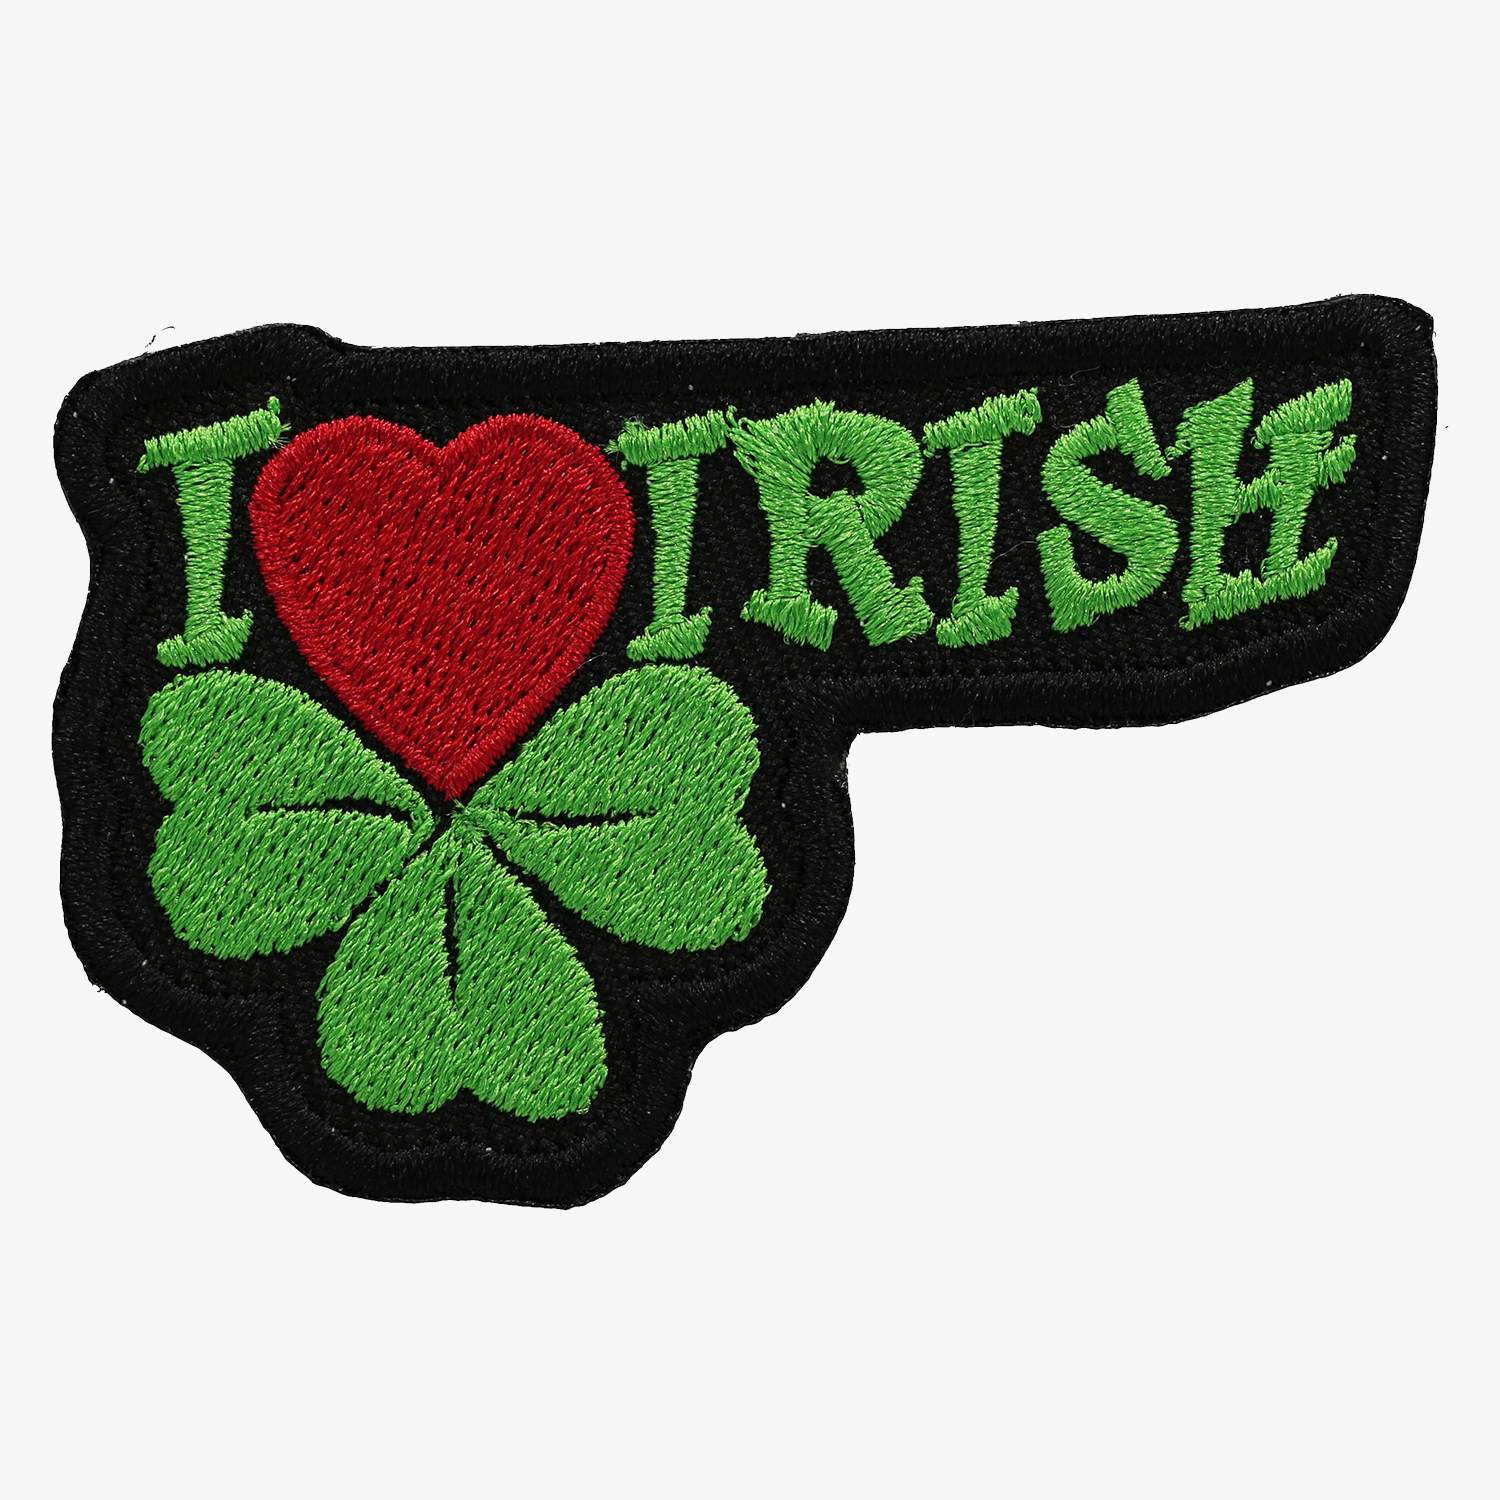 I LOVE IRISH GREEN CLOVER PATCH